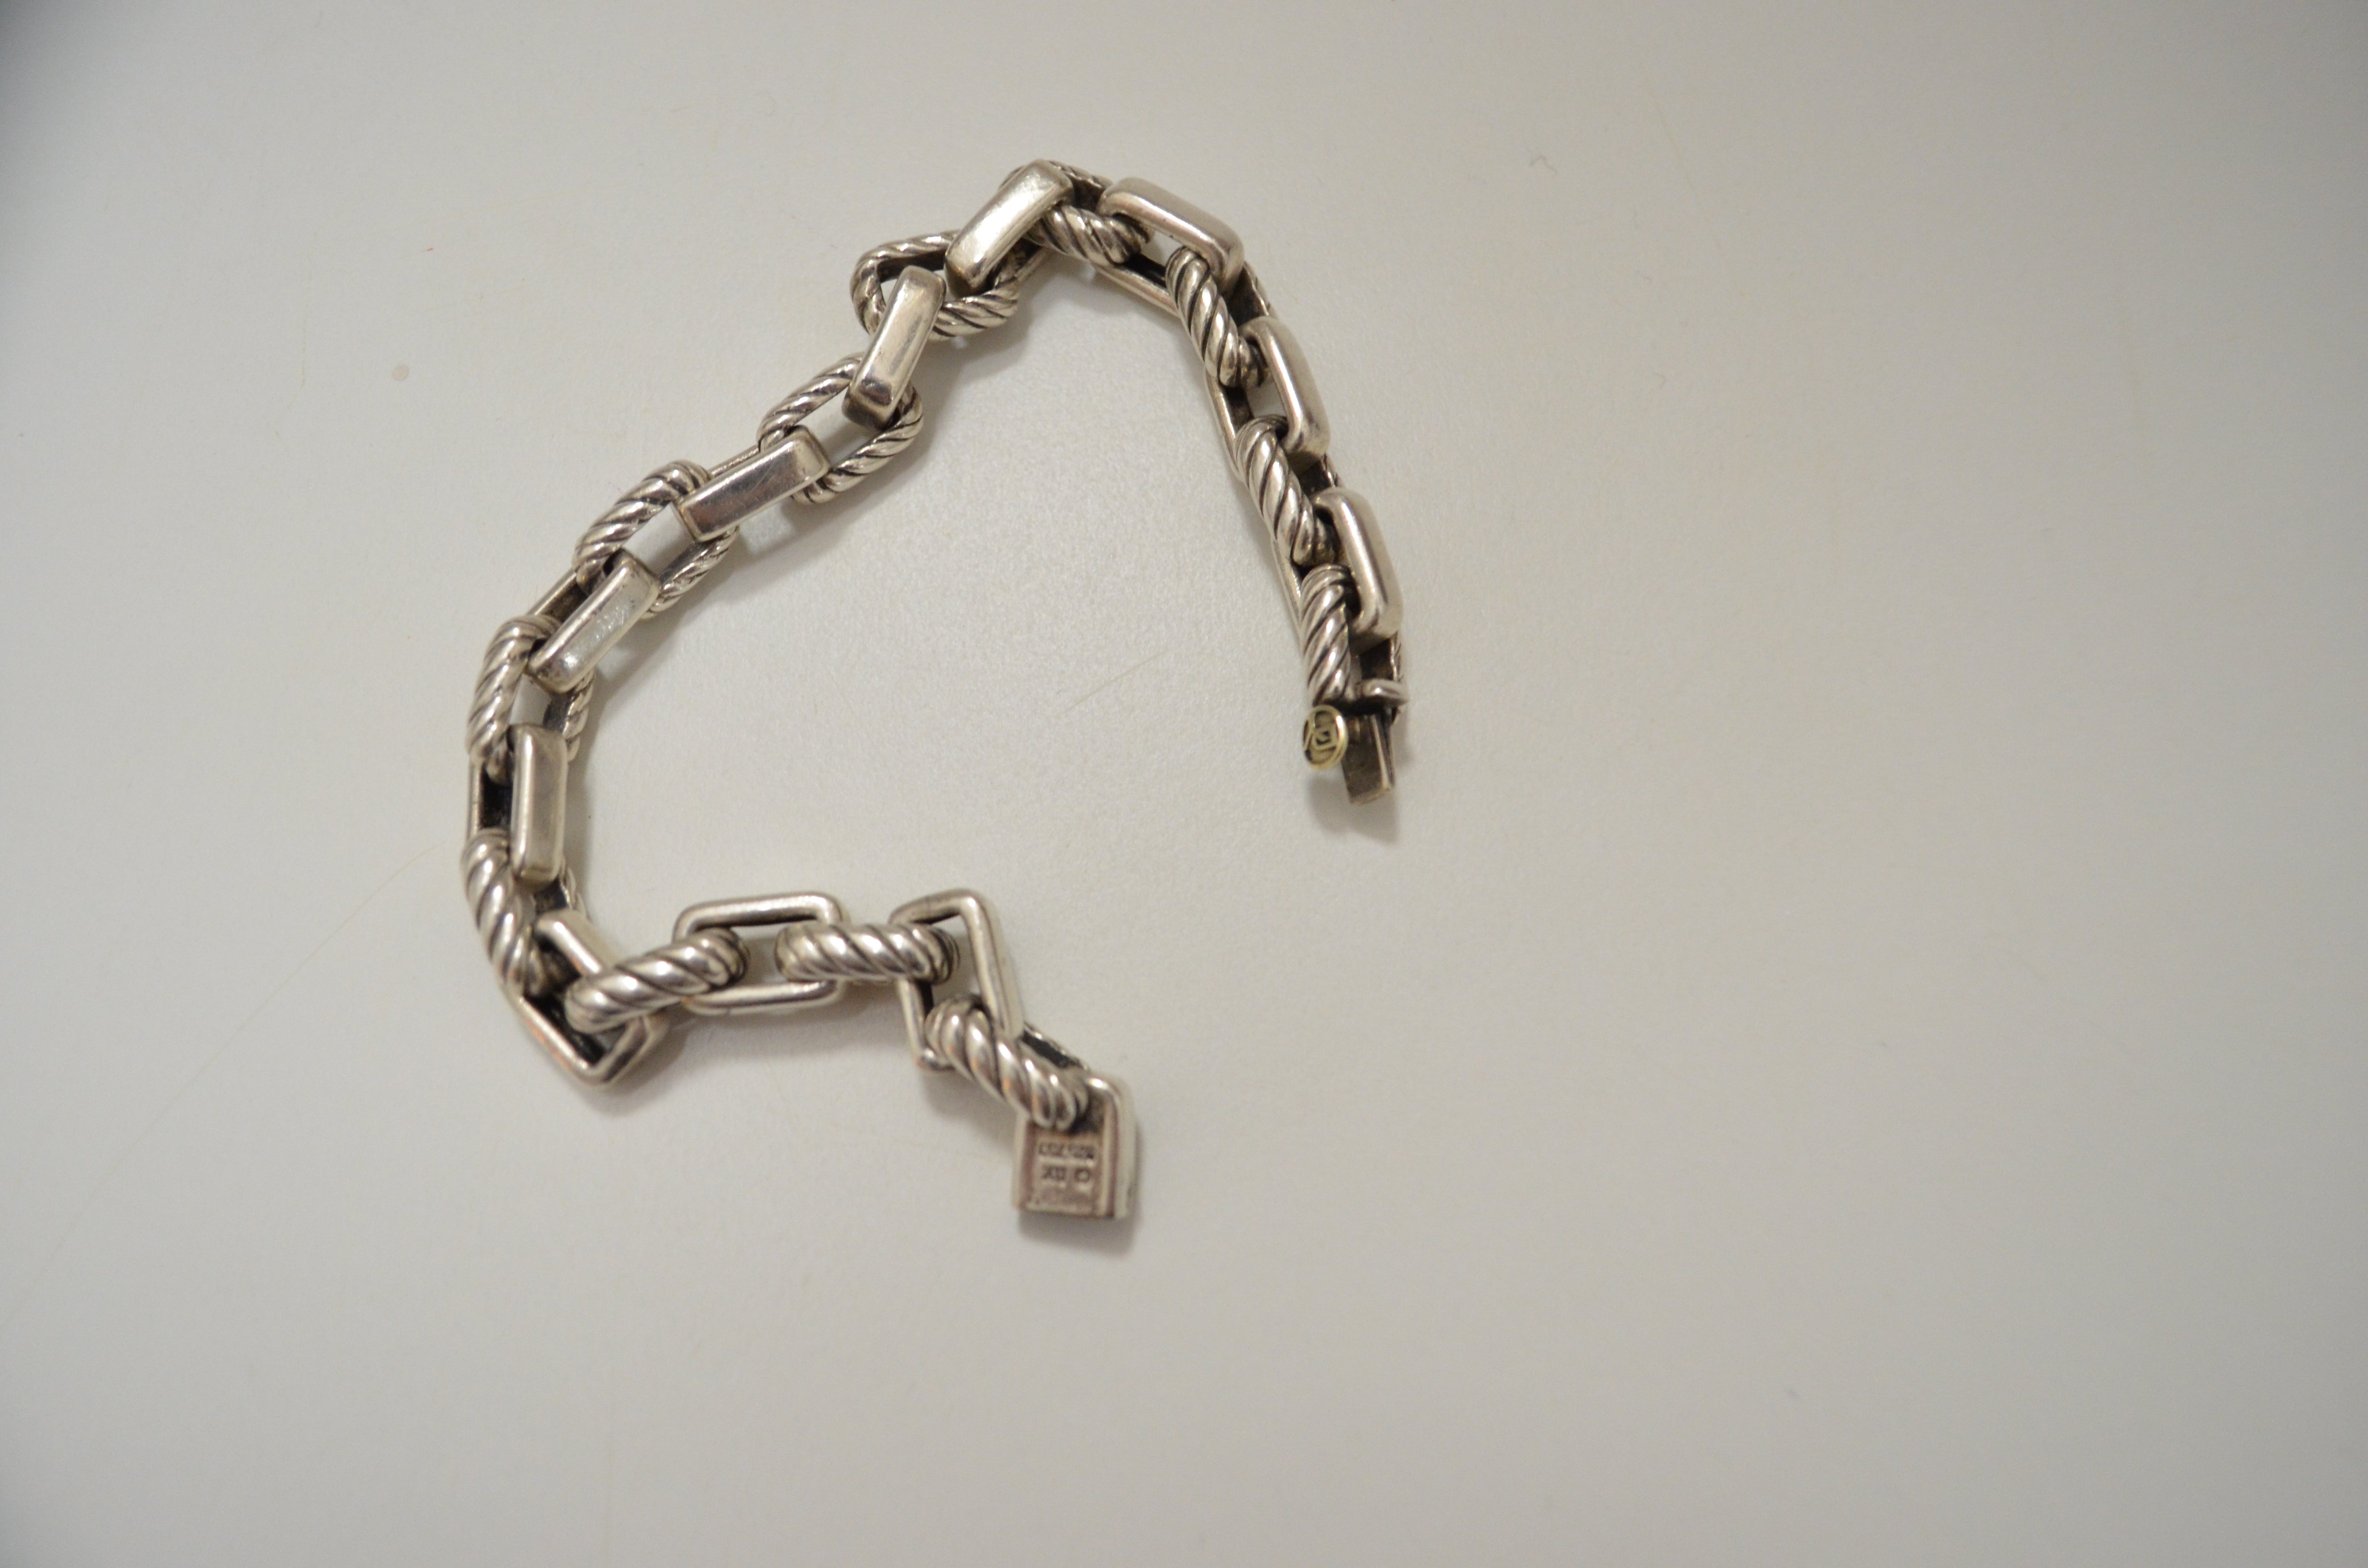 Authentic David Yurman Madison Chain Large Link Bracelet sterling silver